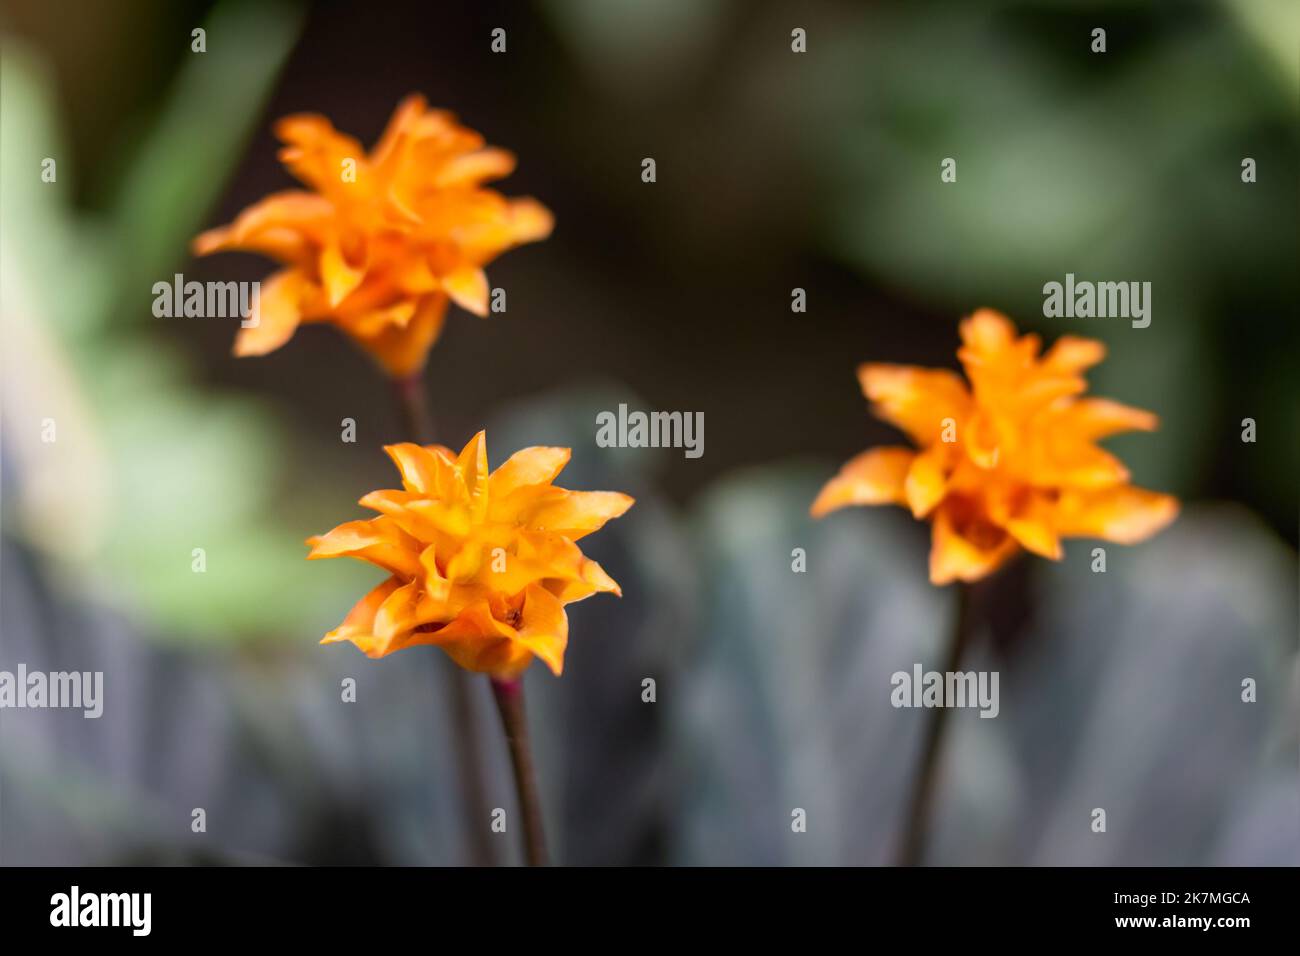 Goeppertia crocata or Calathea crocata, the saffron-coloured calathea. Beautiful orange flower with green leaves. Stock Photo